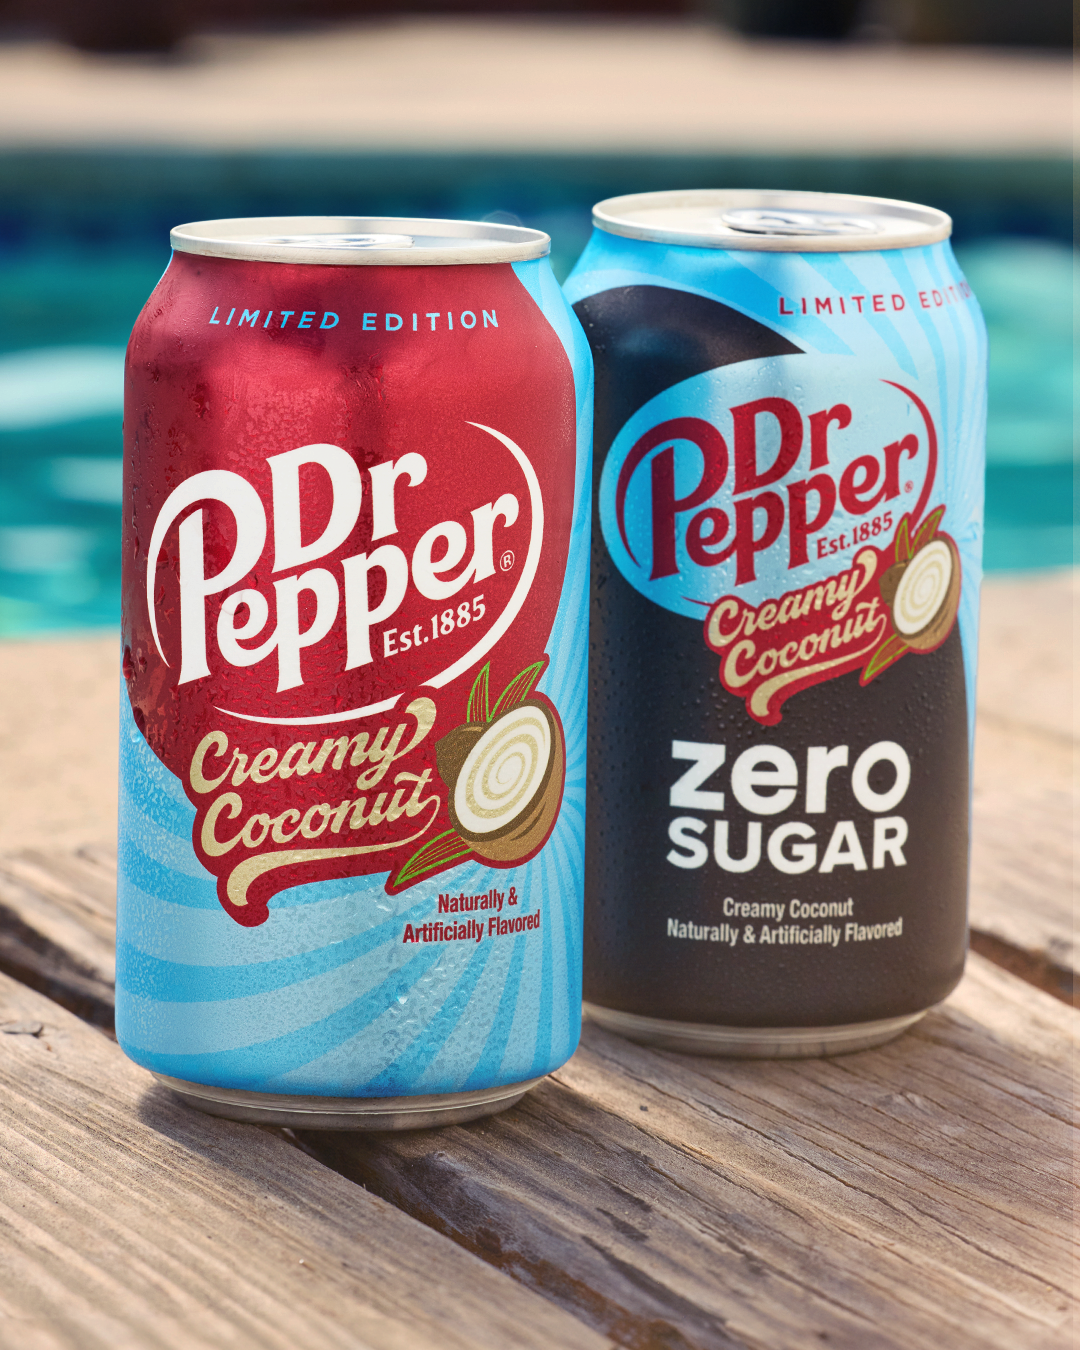 Move over Pepsi, Dr Pepper becomes American's No. 2 soda